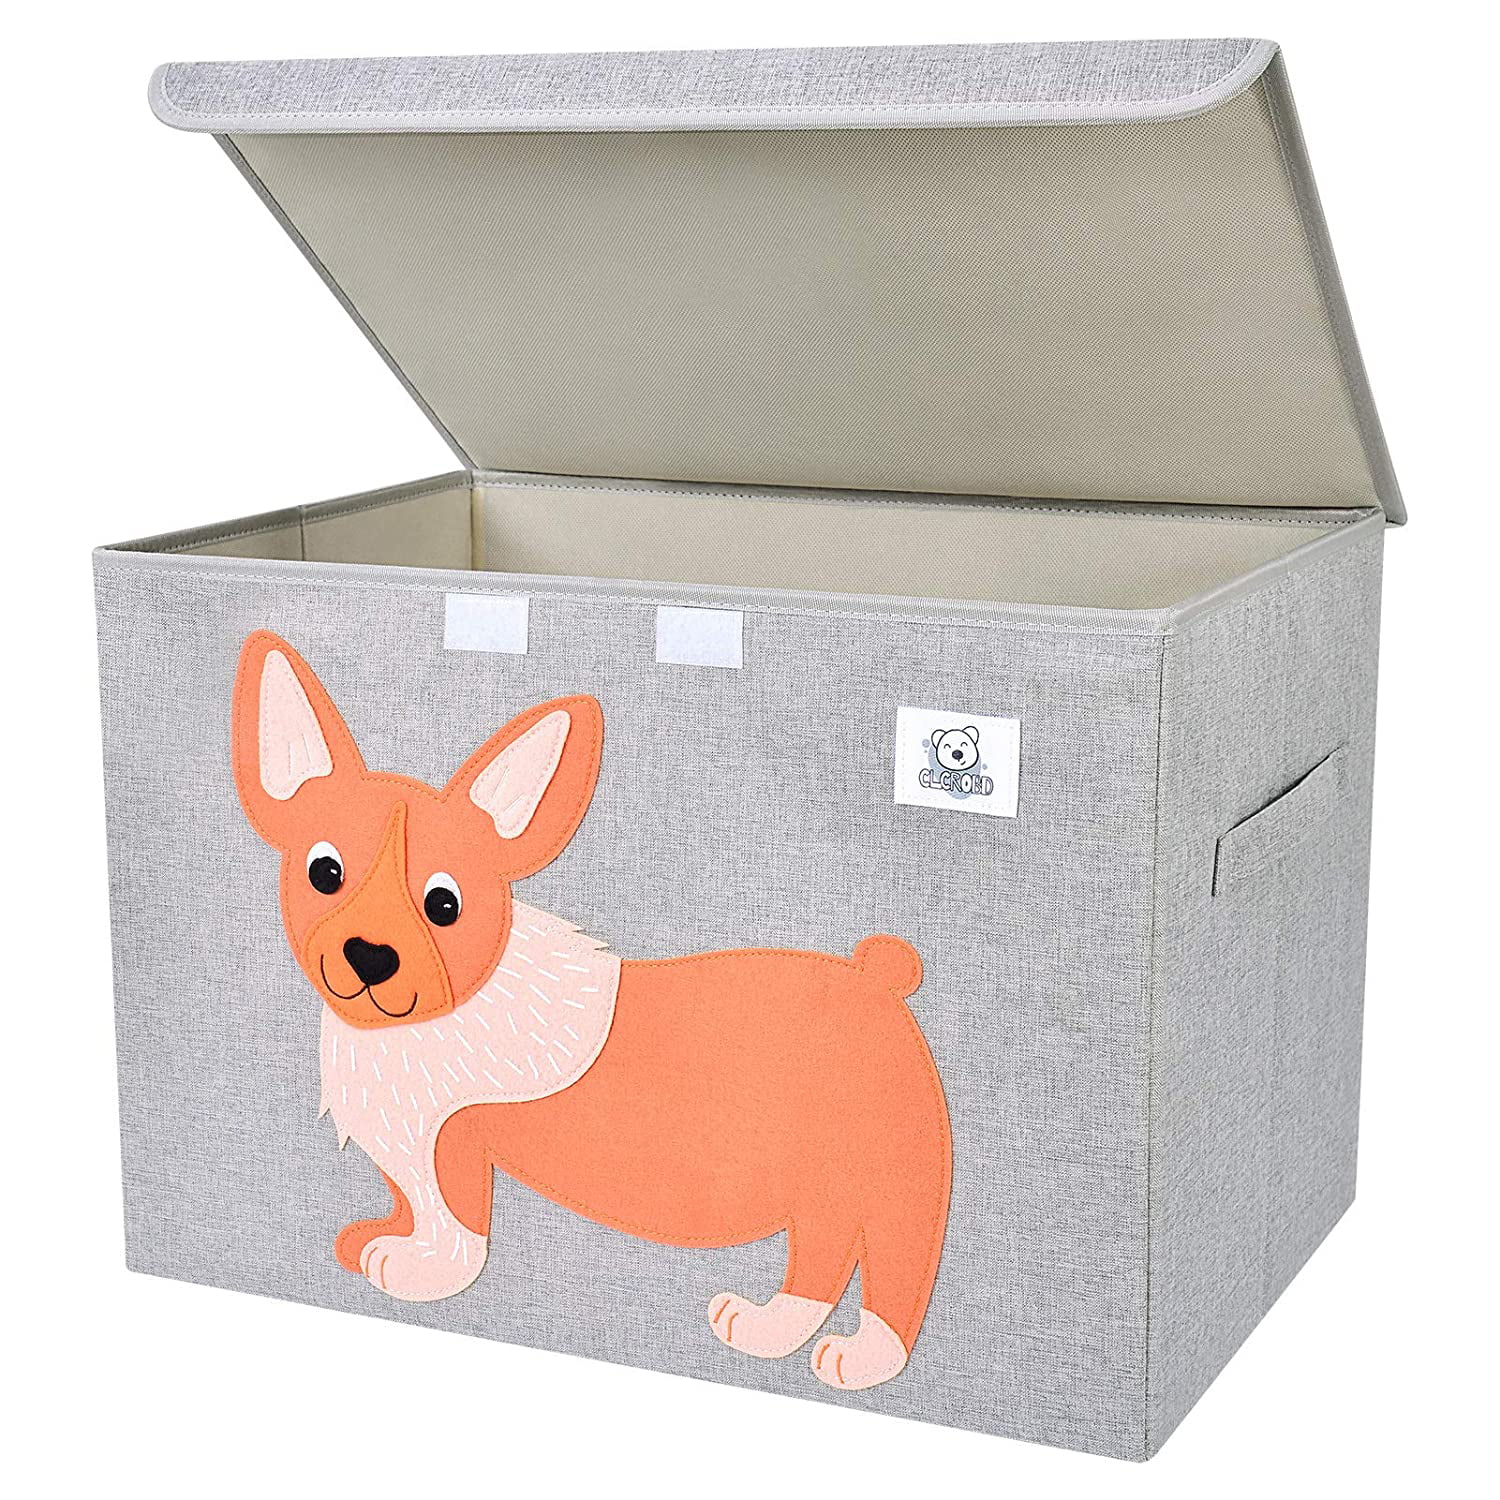 Vmotor Foldable Animal Canvas Storage Toy Box/Bin/Cube/Chest/Basket/Organizer For Kids 13 inch Dog 